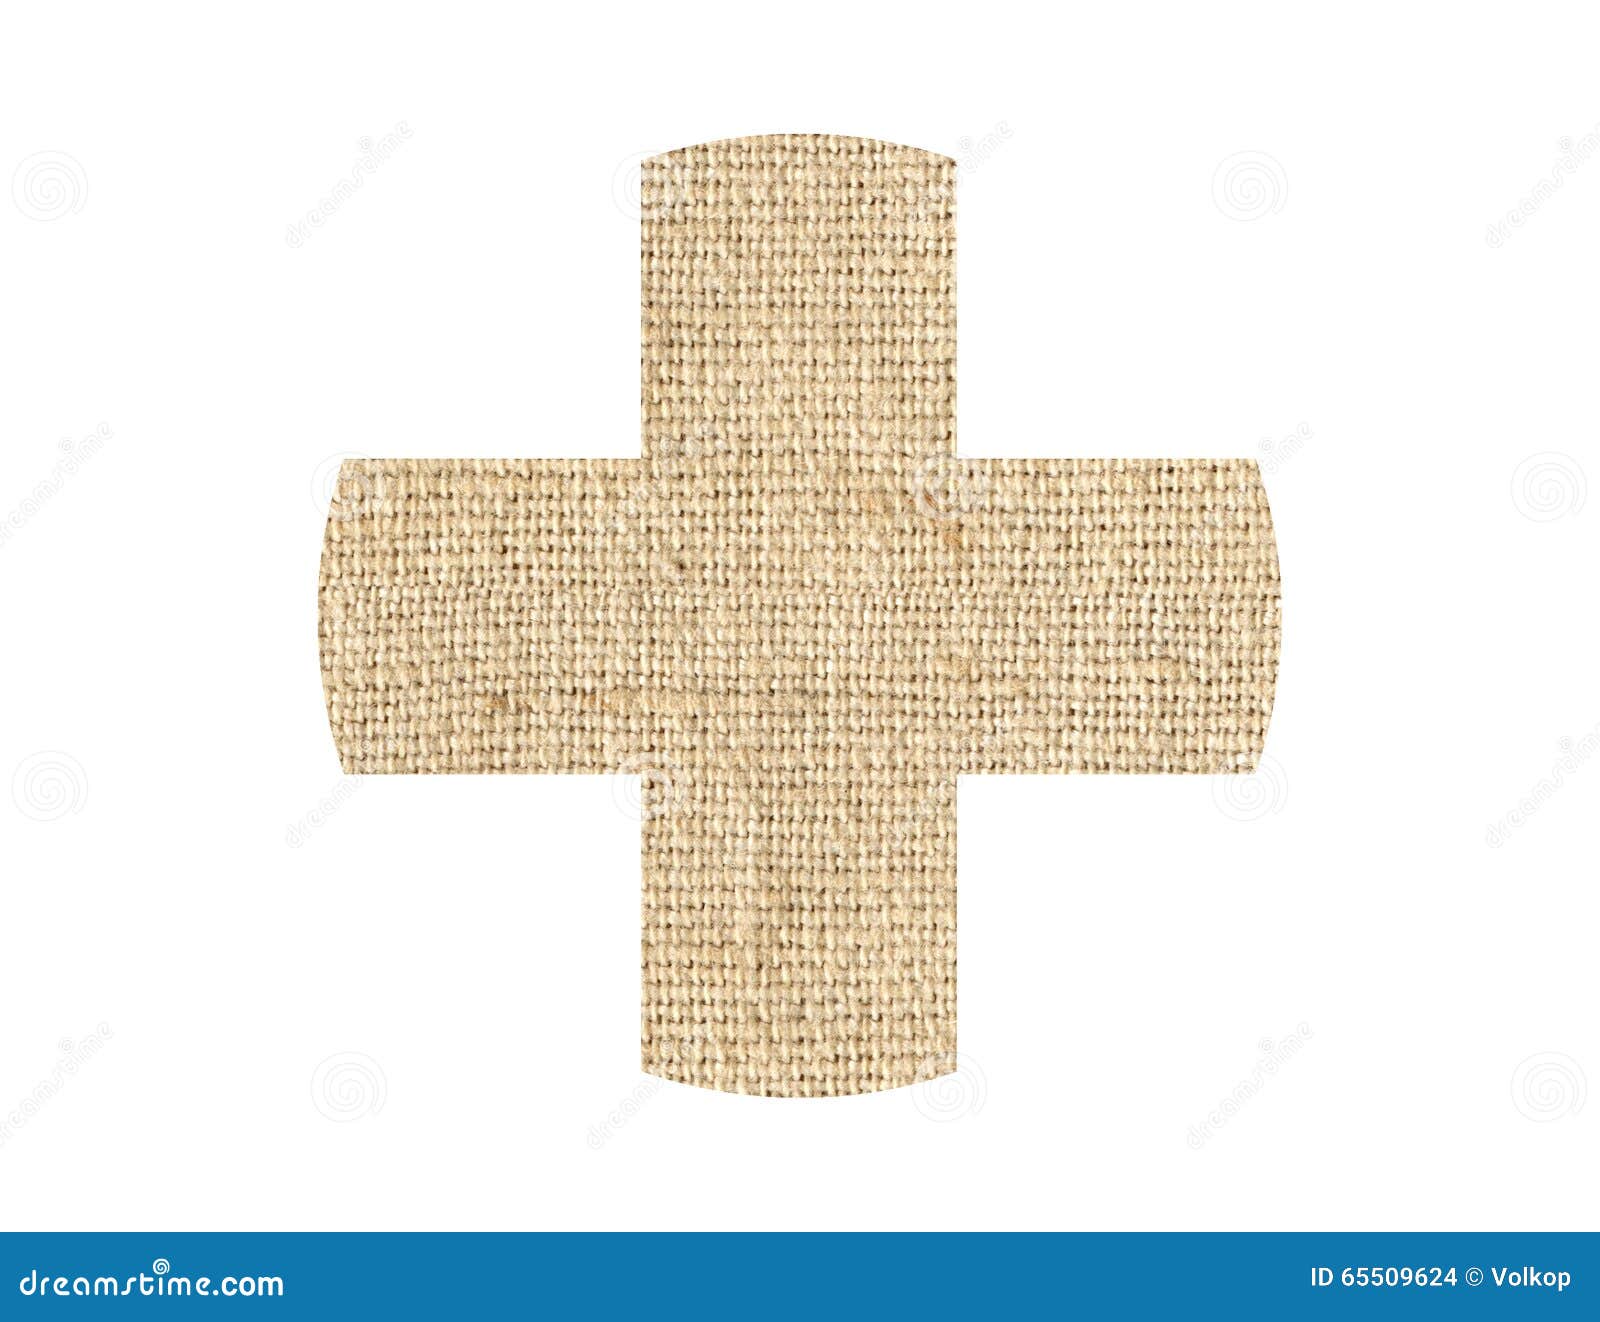 Medical Cross Patch